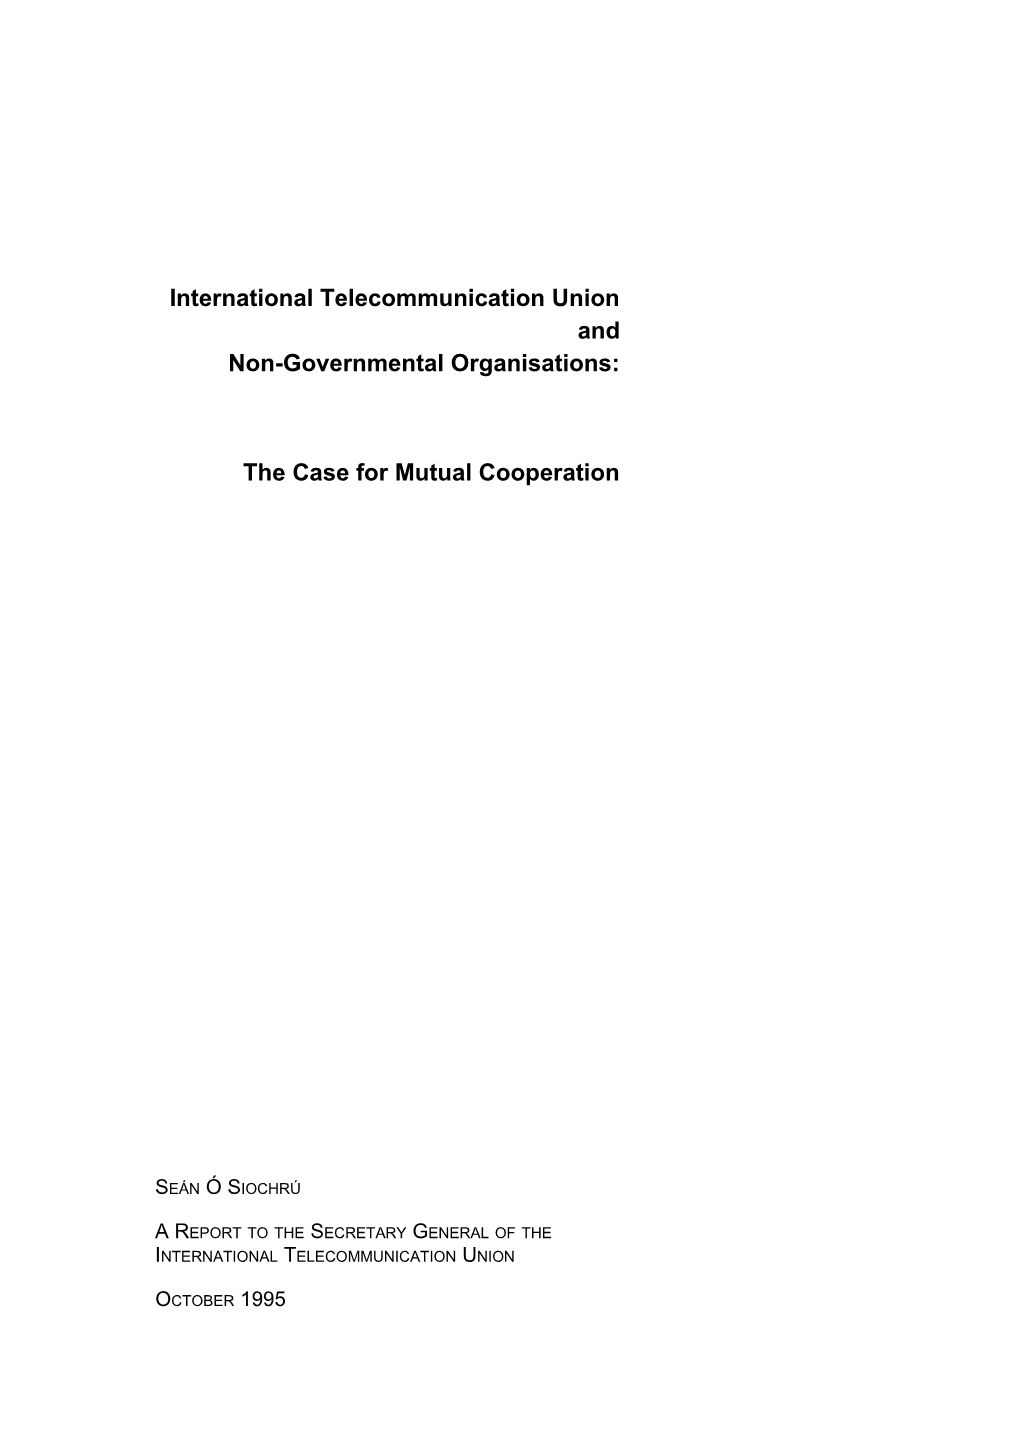 ITU & NGO Report for Tarjanne